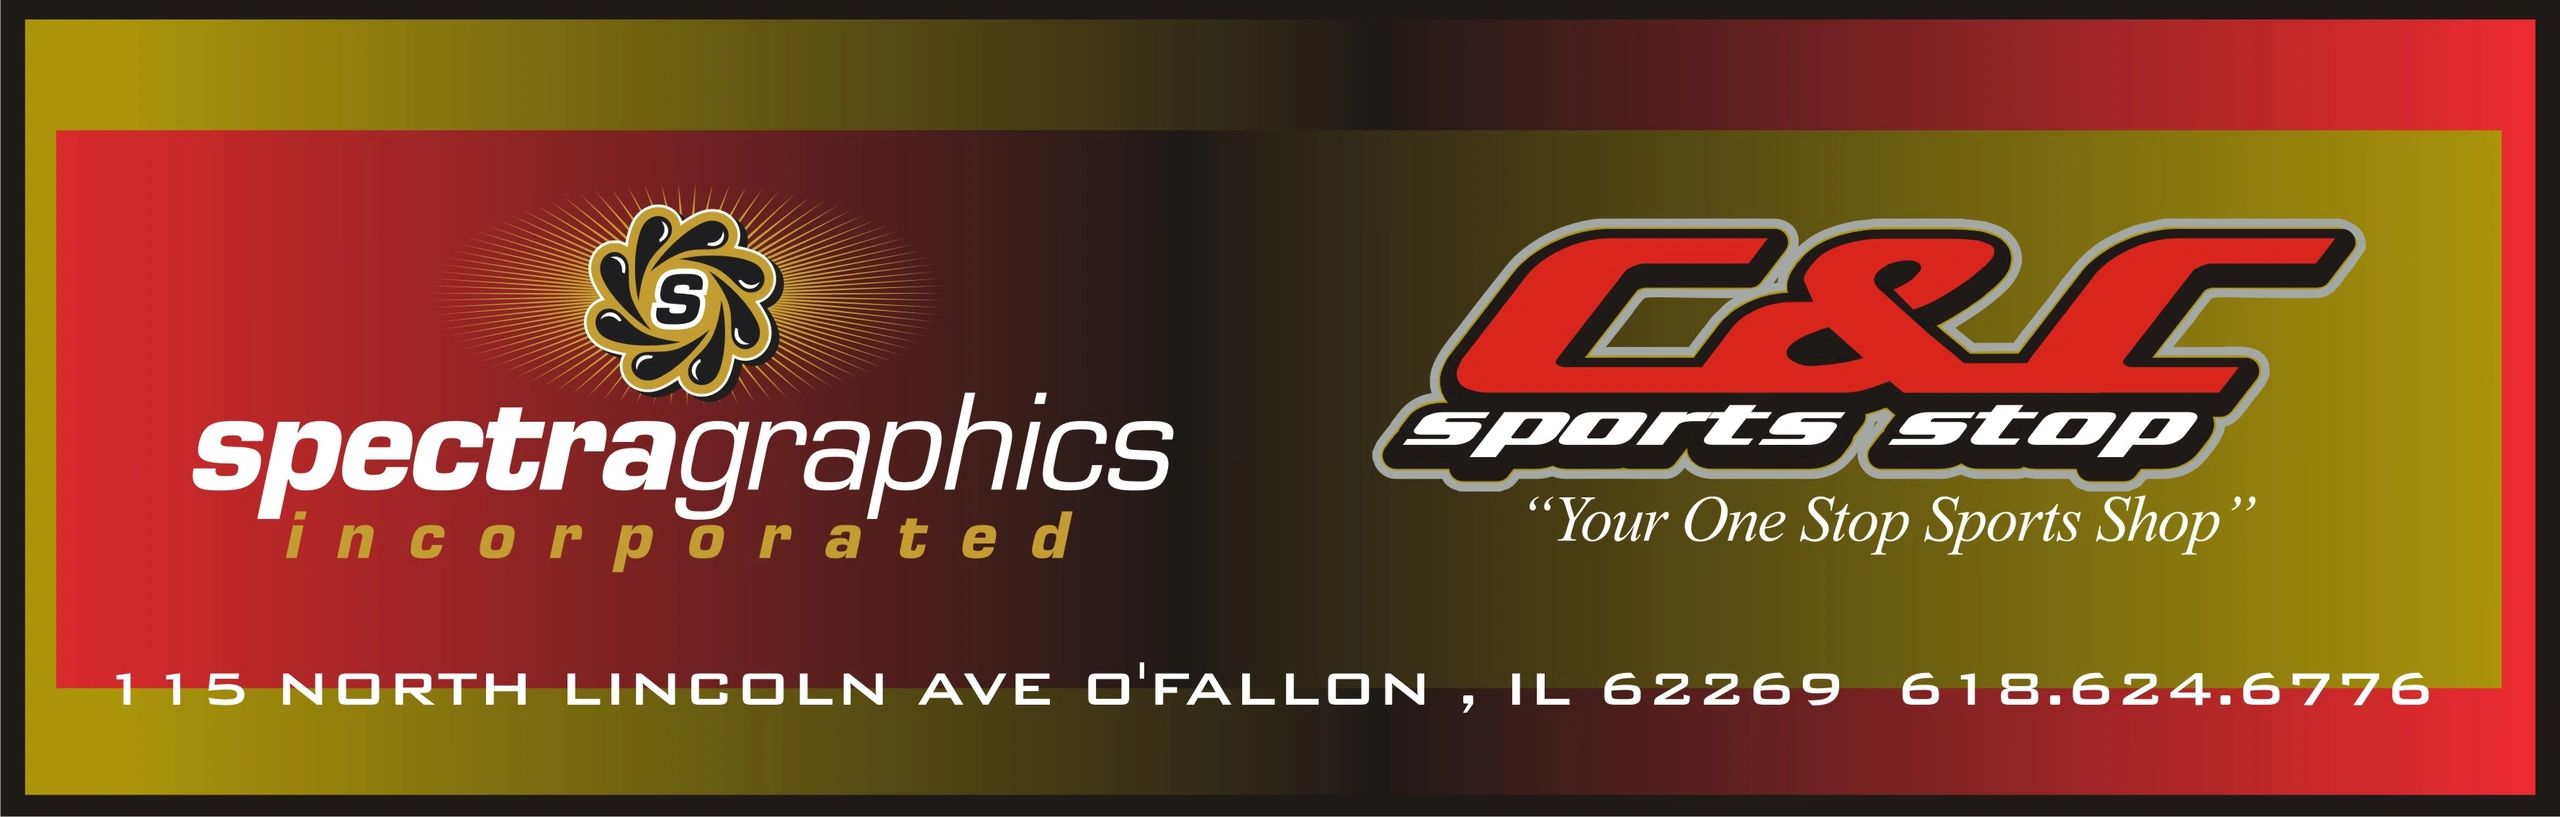 Spectra Graphics Inc, C & C Sports Stop, C&C Sports Stop, Spectragraphics Inc, Spectra Graphics, Spe